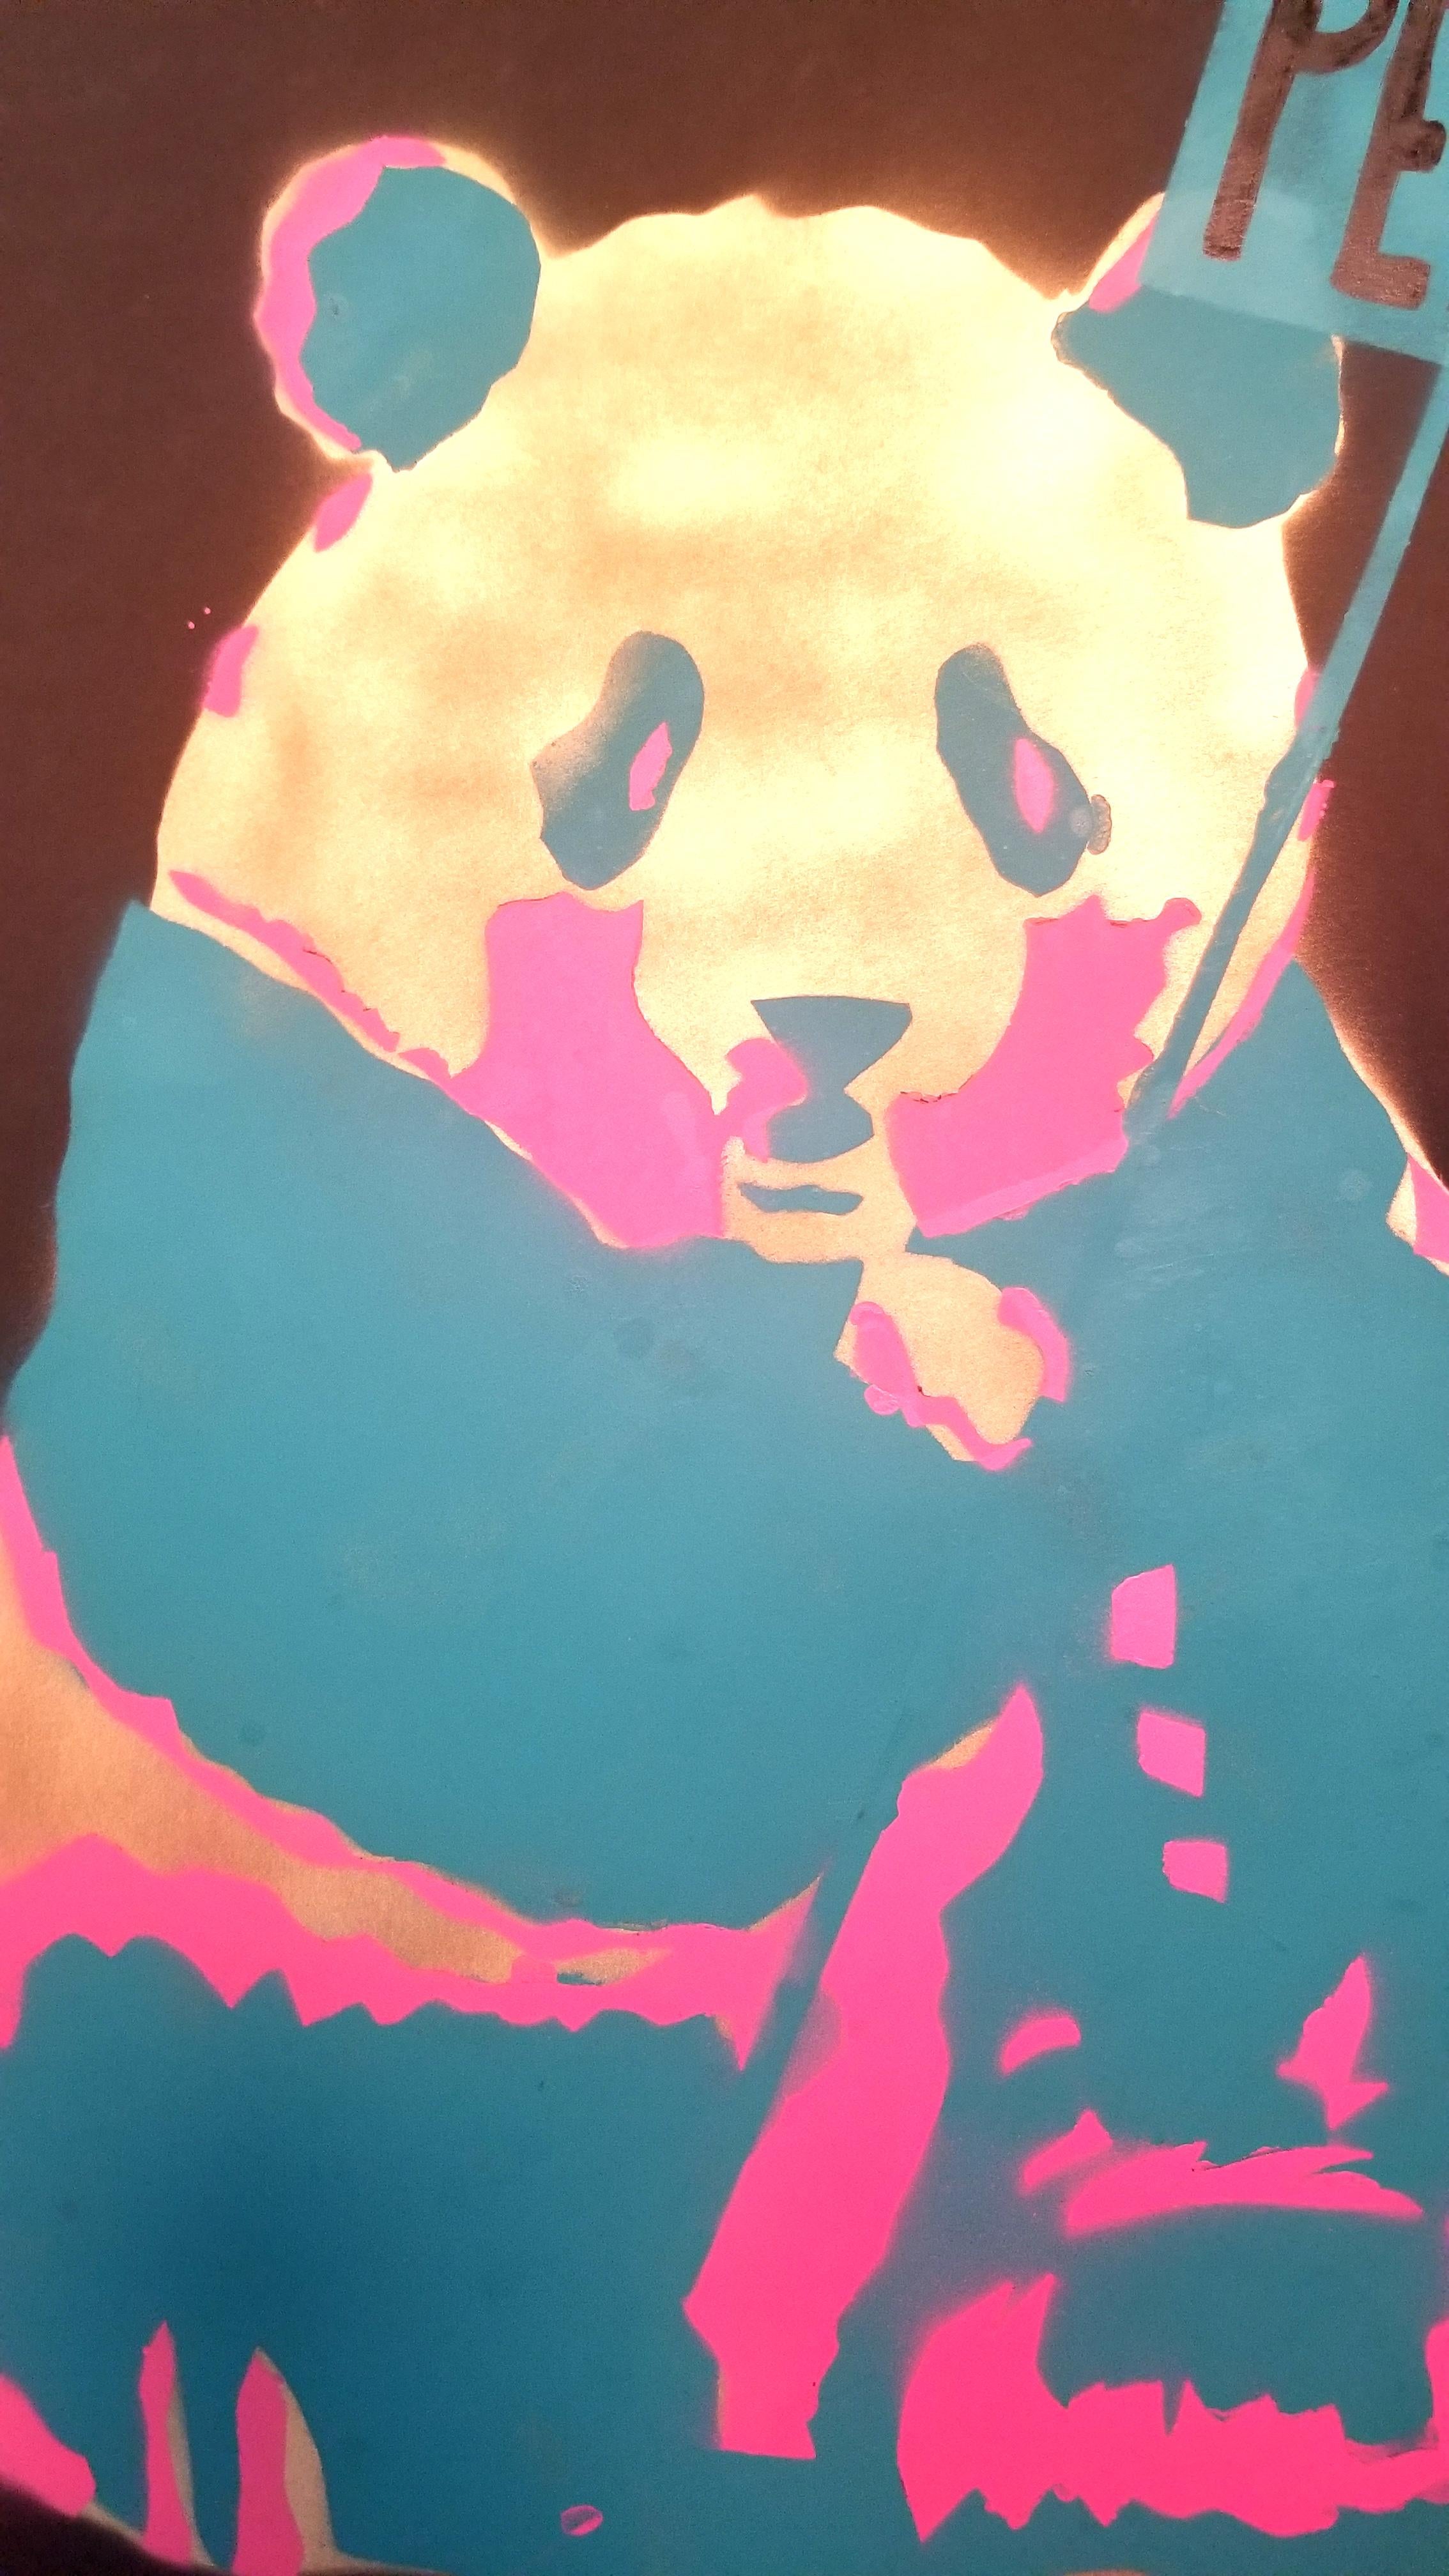 PEACE Panda Bear  - Contemporary Mixed Media Art by K.K.